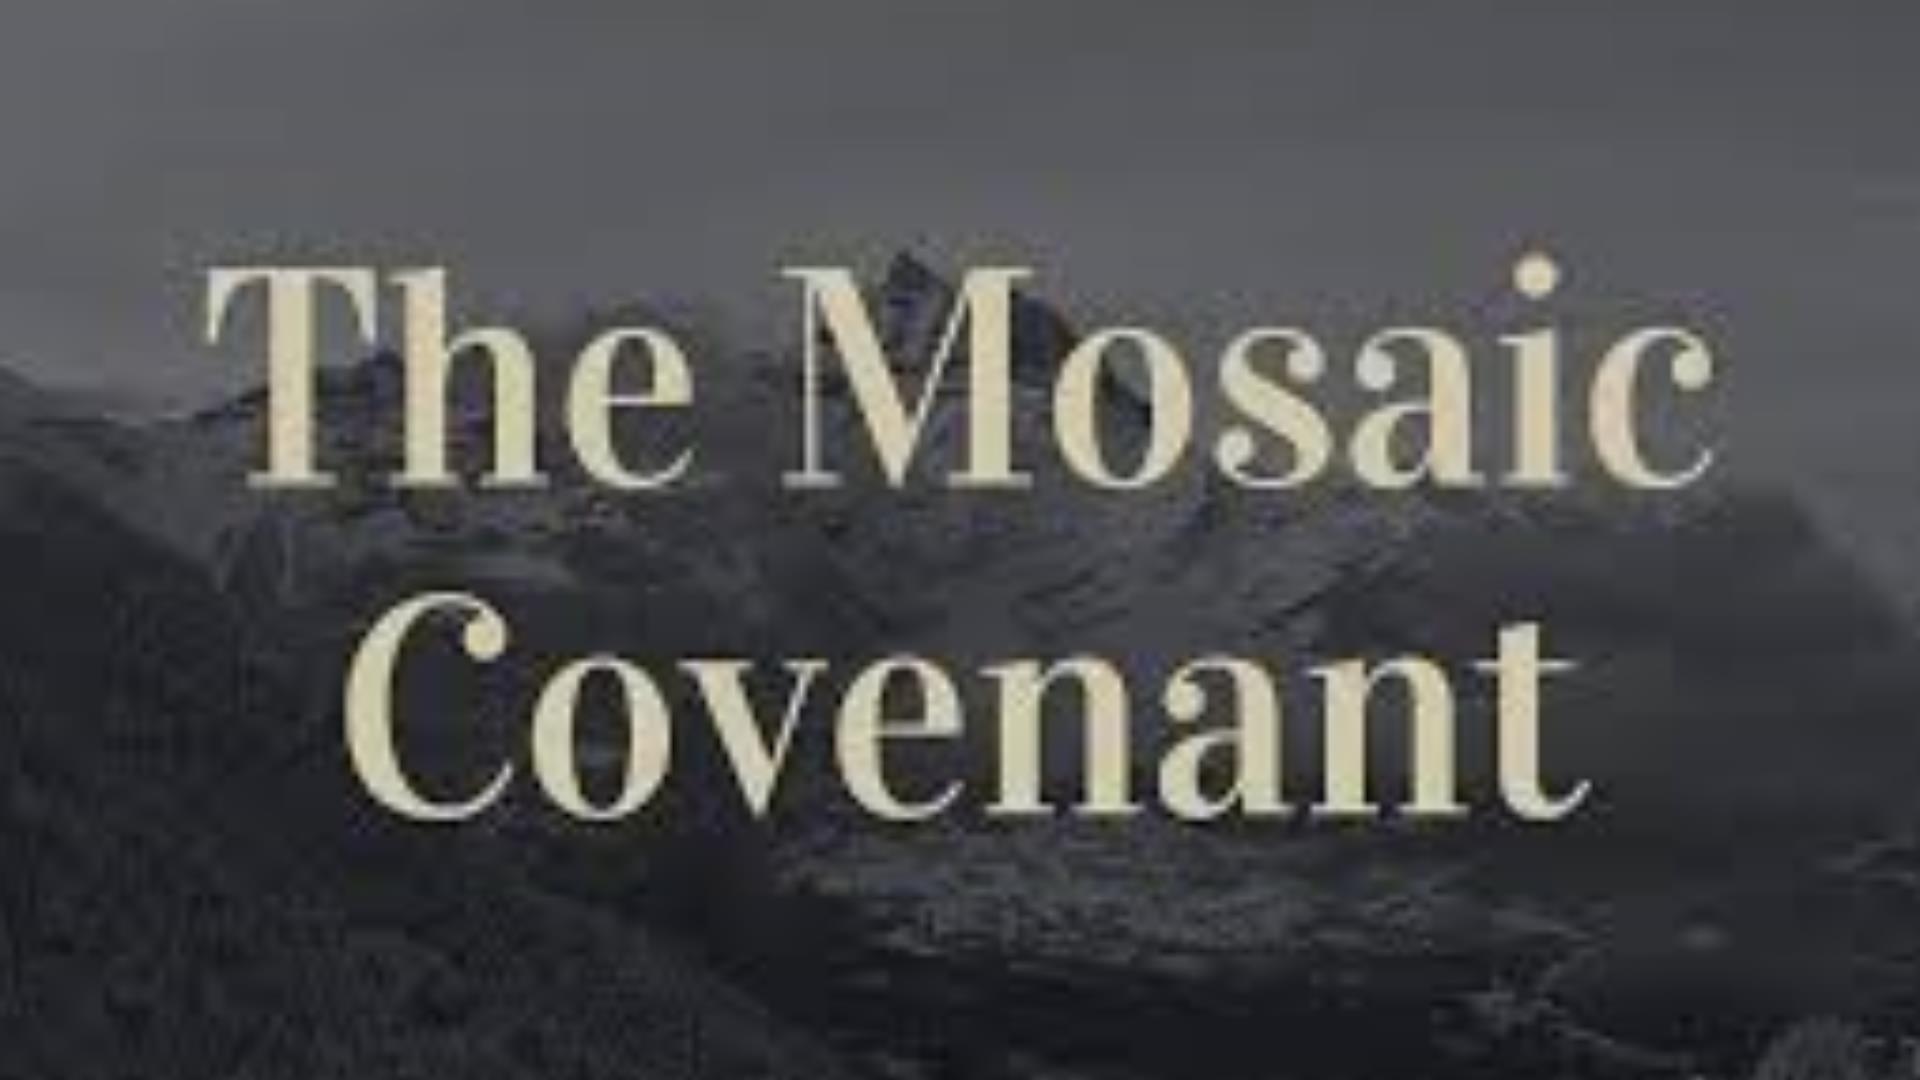 Mosaic Covenant